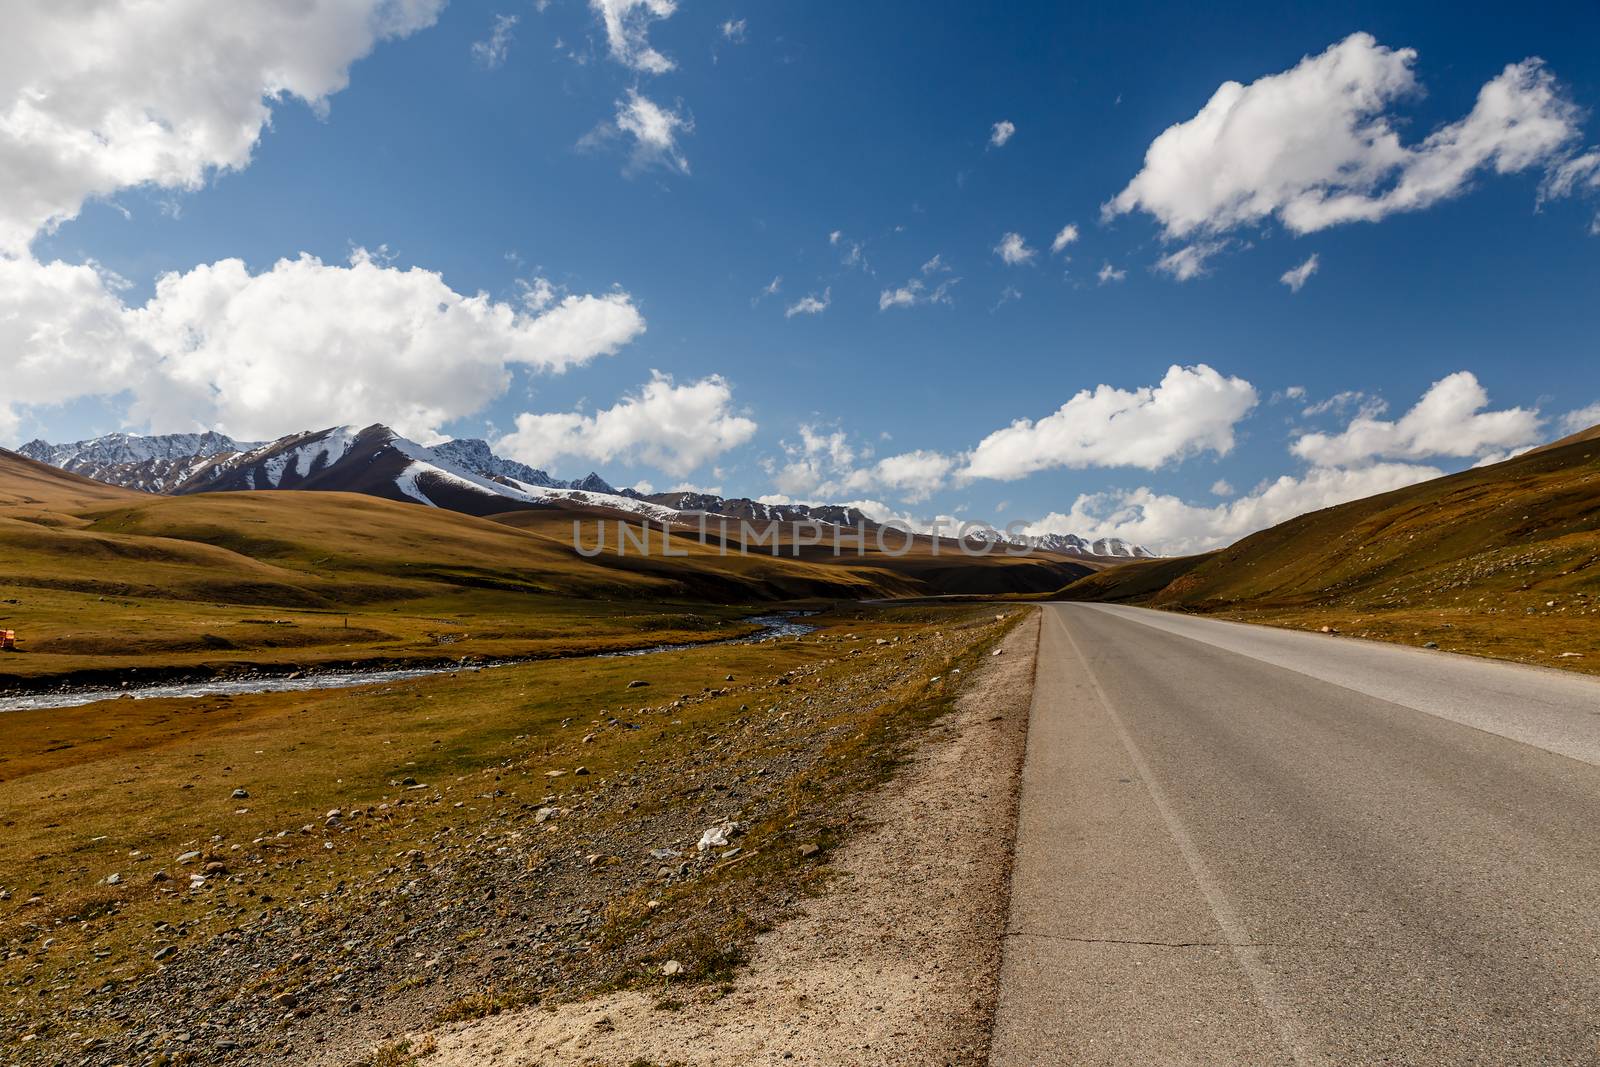 asphalt road, Bishkek-Osh highway M41, Suusamyr valley Chuy Province Kyrgyzstan